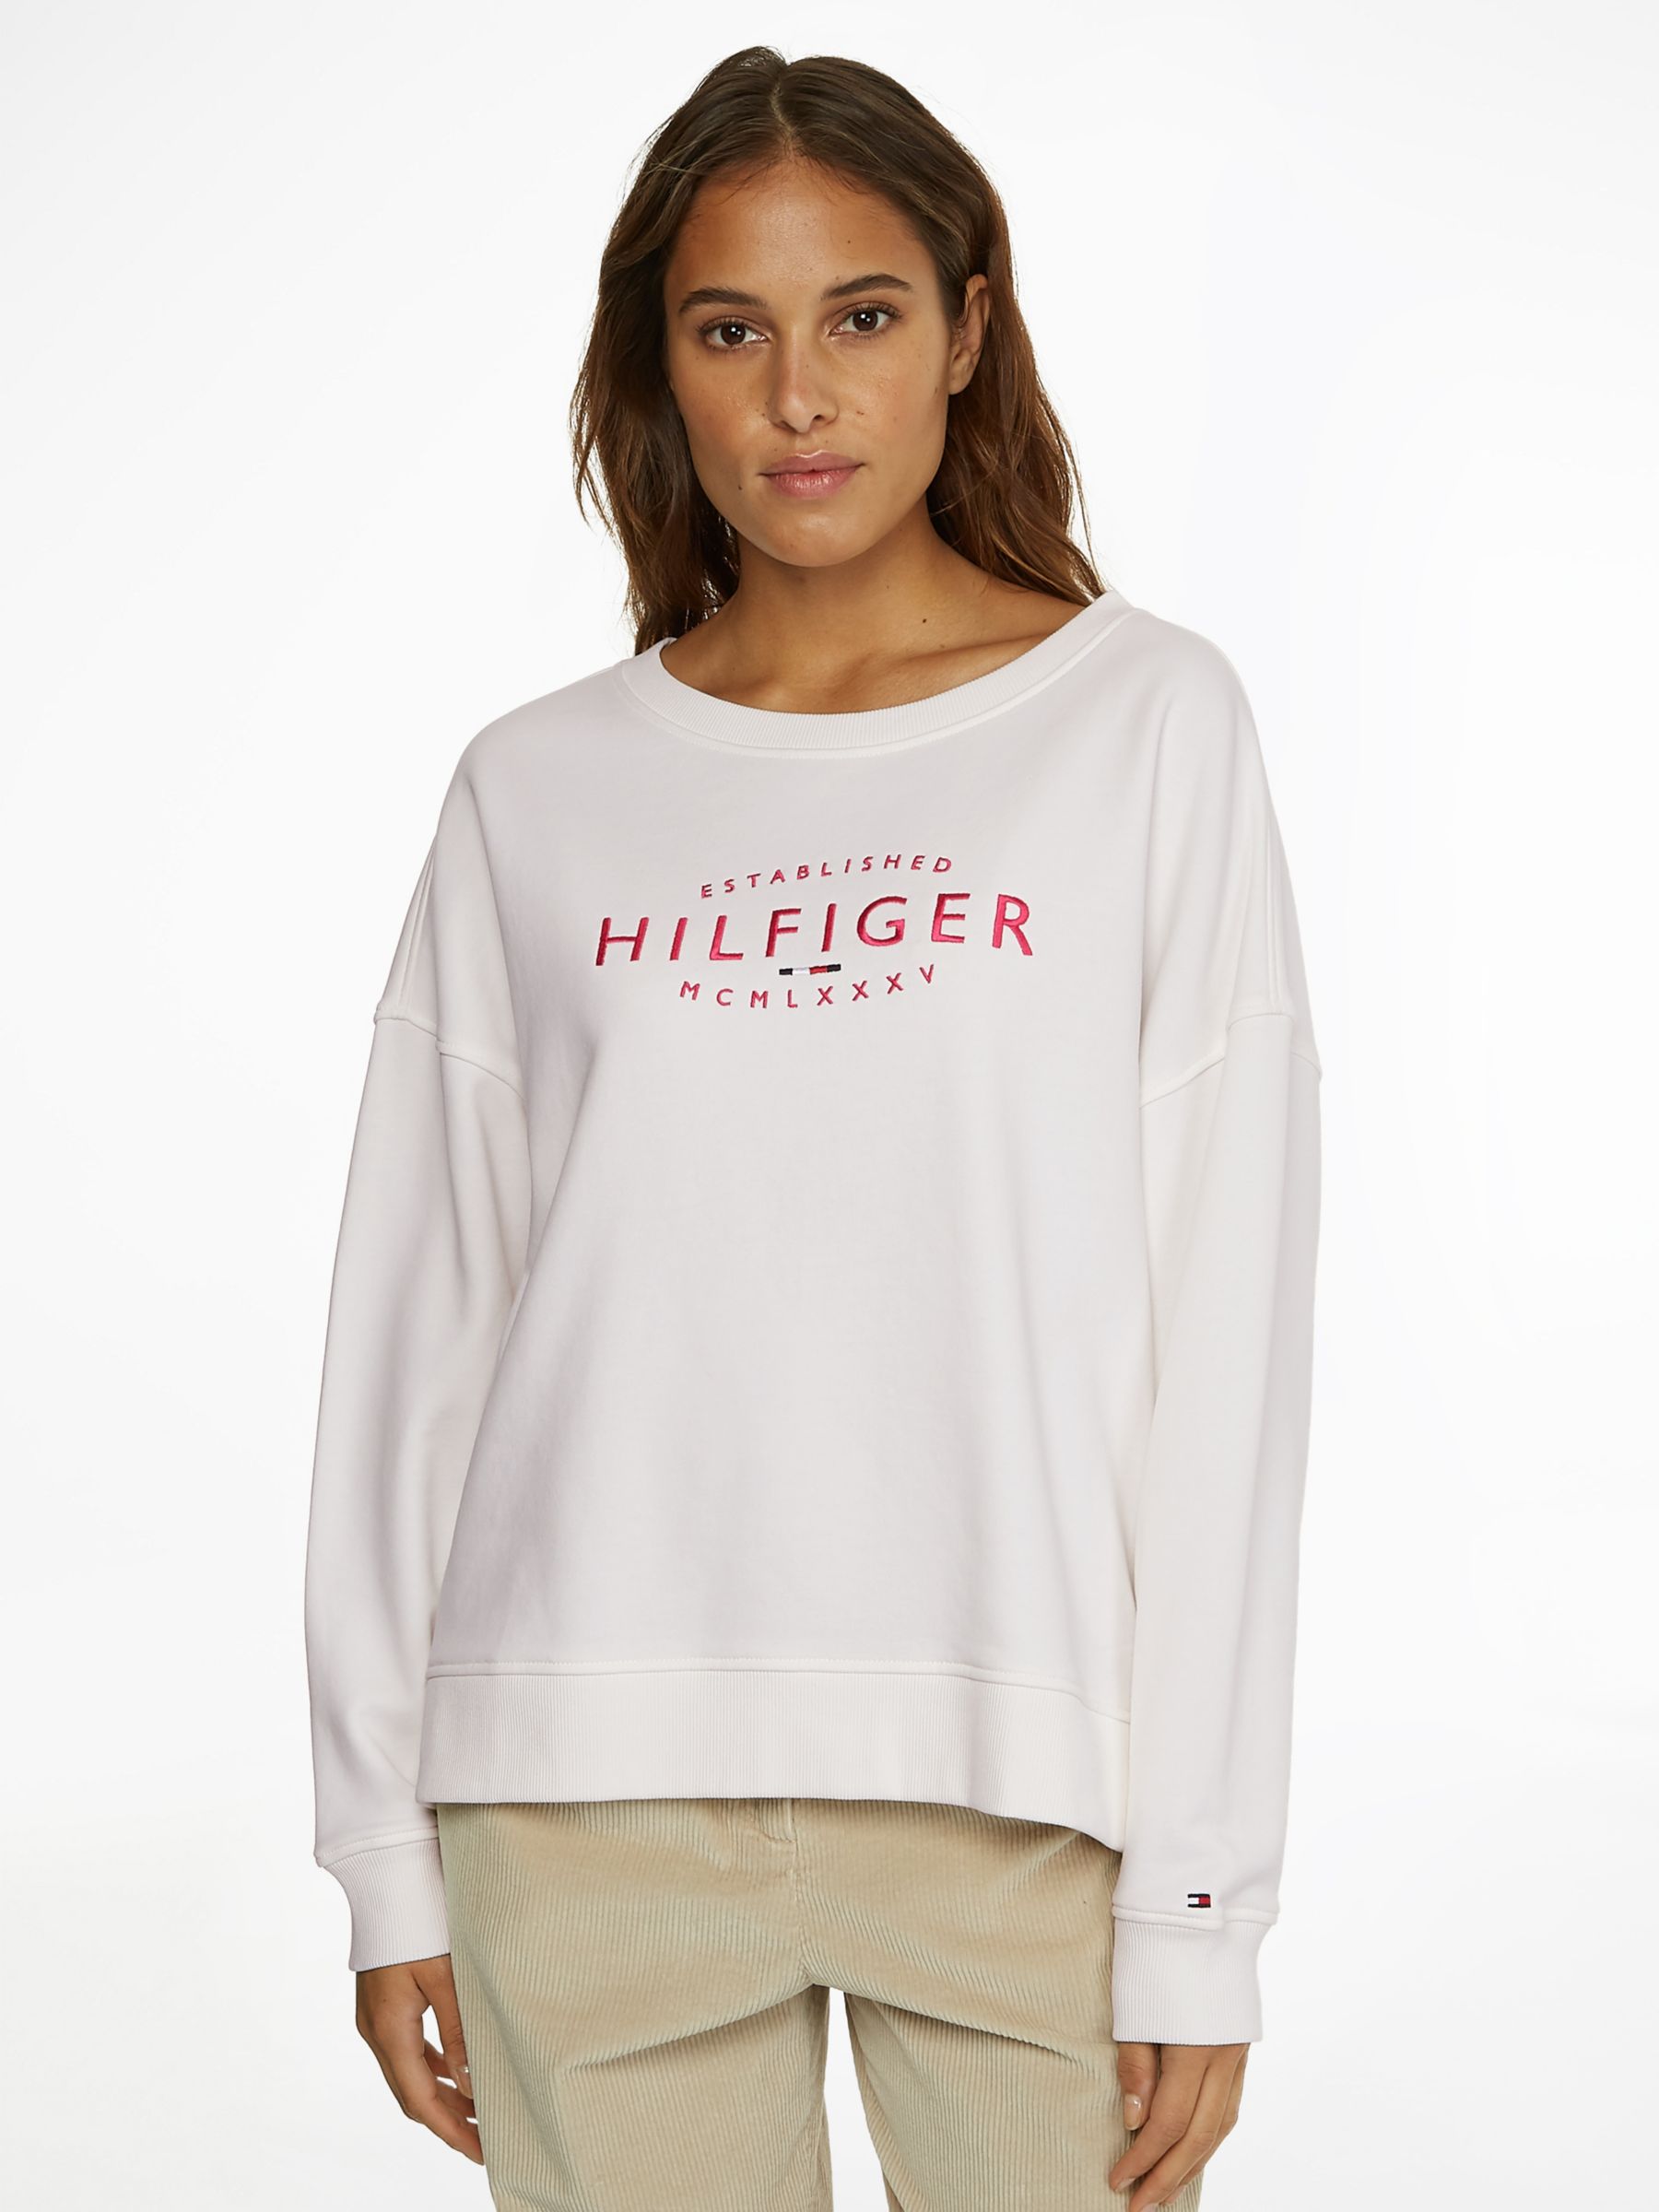 Tommy Hilfiger Embroidered Logo Sweatshirt, Ecru/Multi, S